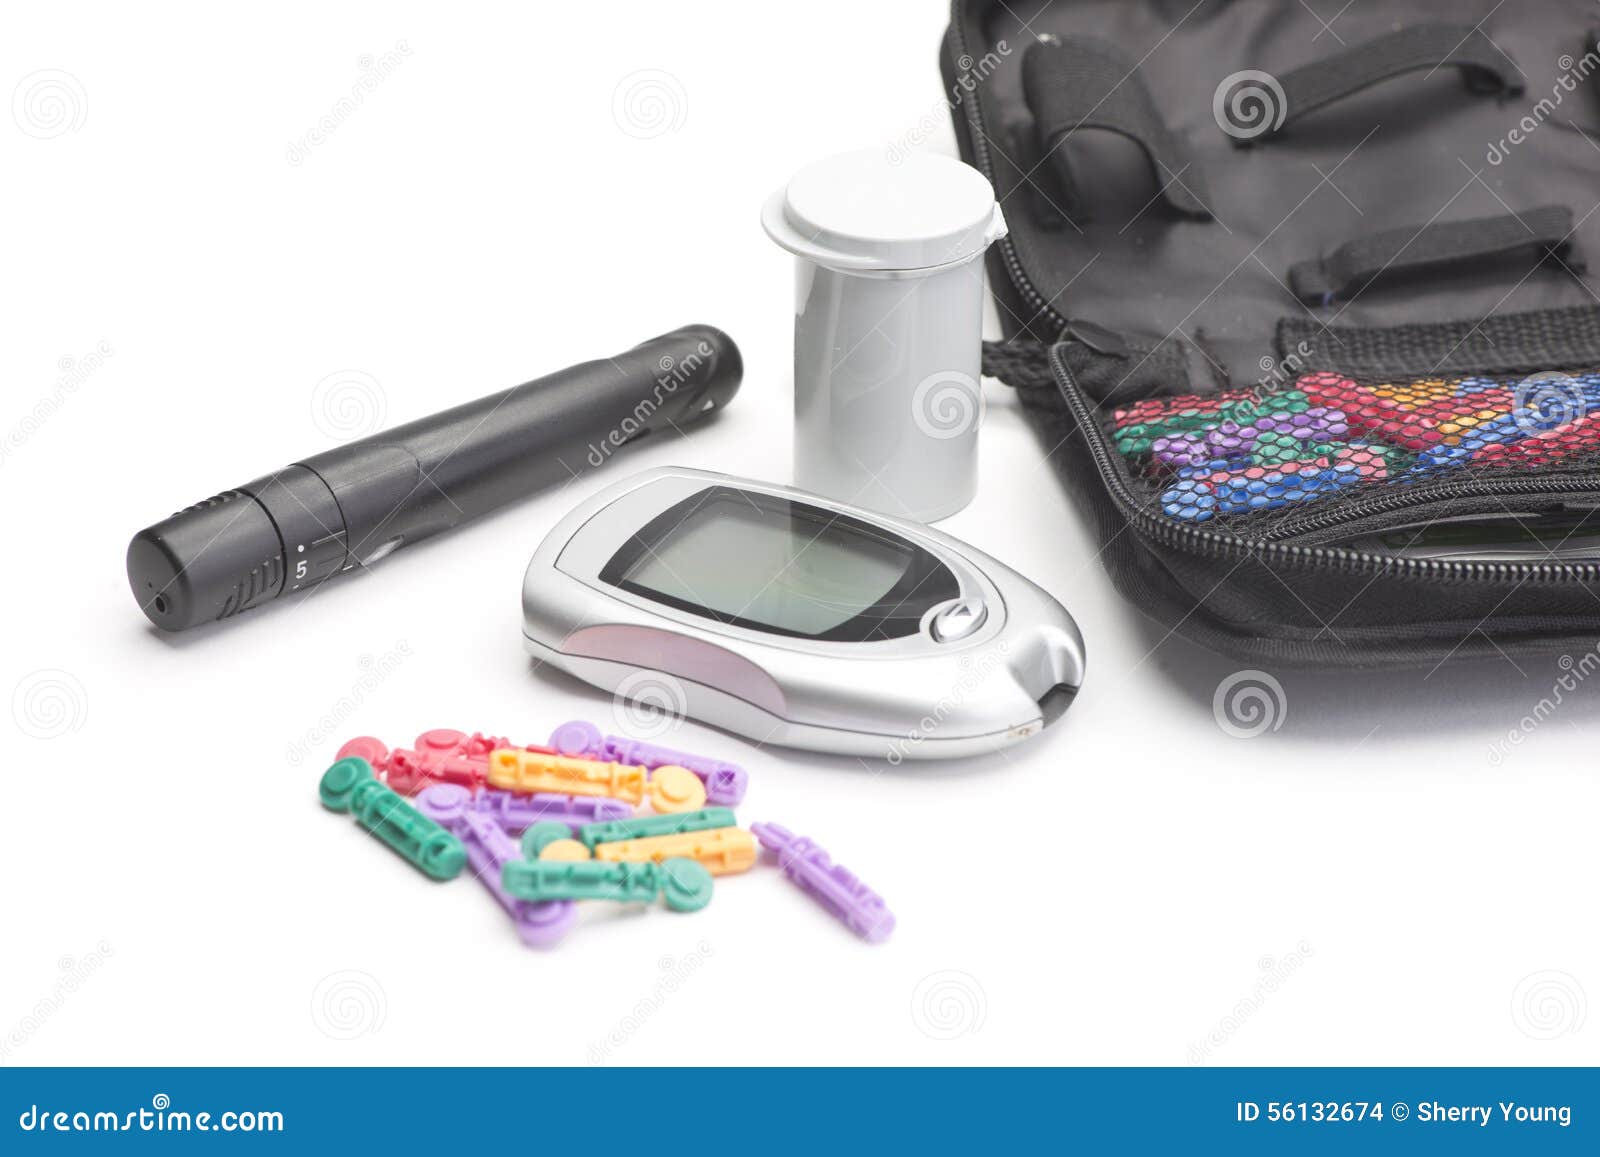 diabetic testing supplies